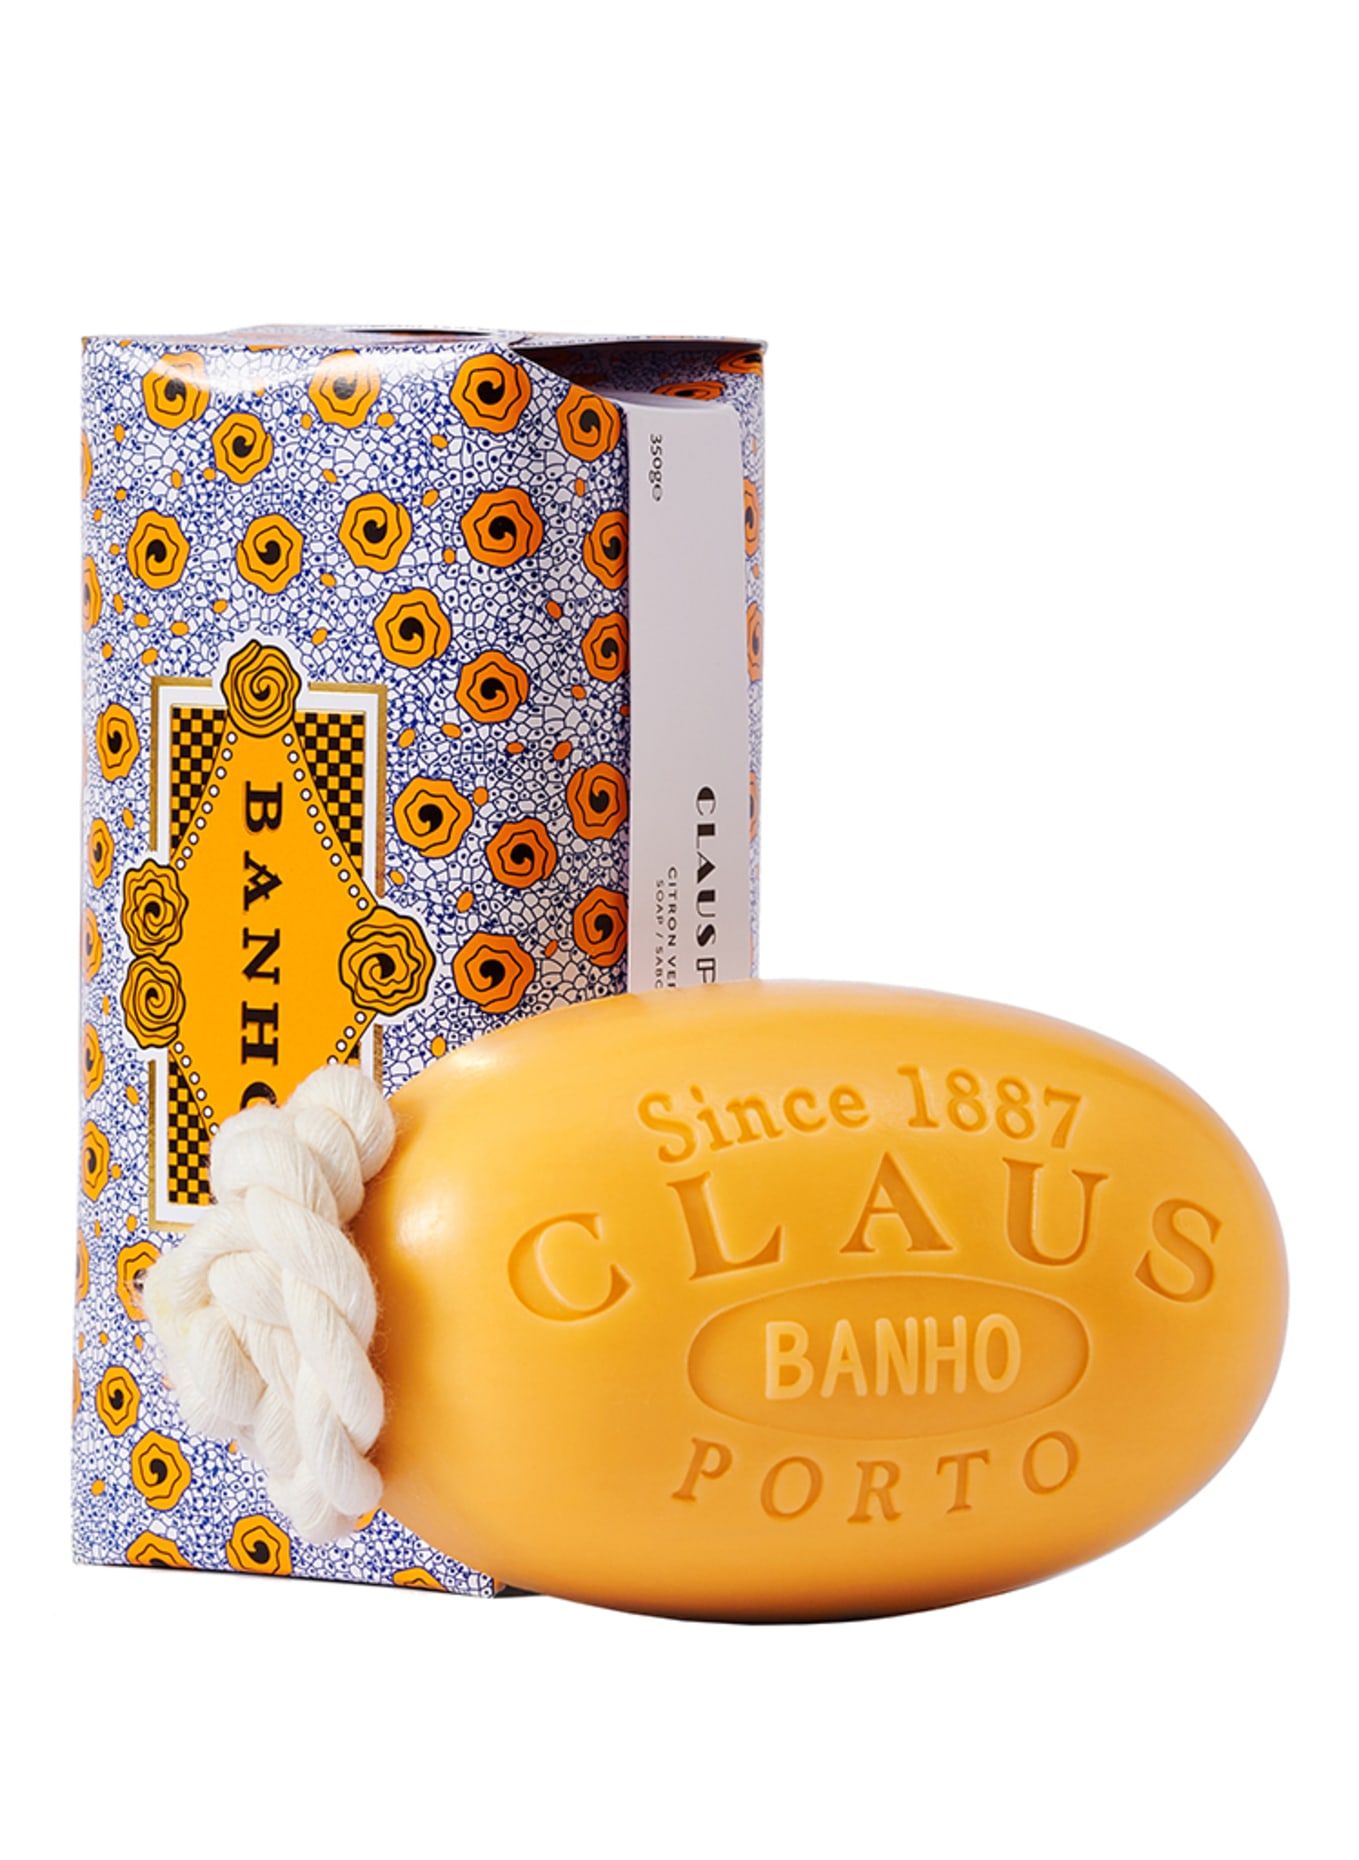 CLAUS PORTO BANHO SOAP ON A ROAP (Bild 1)